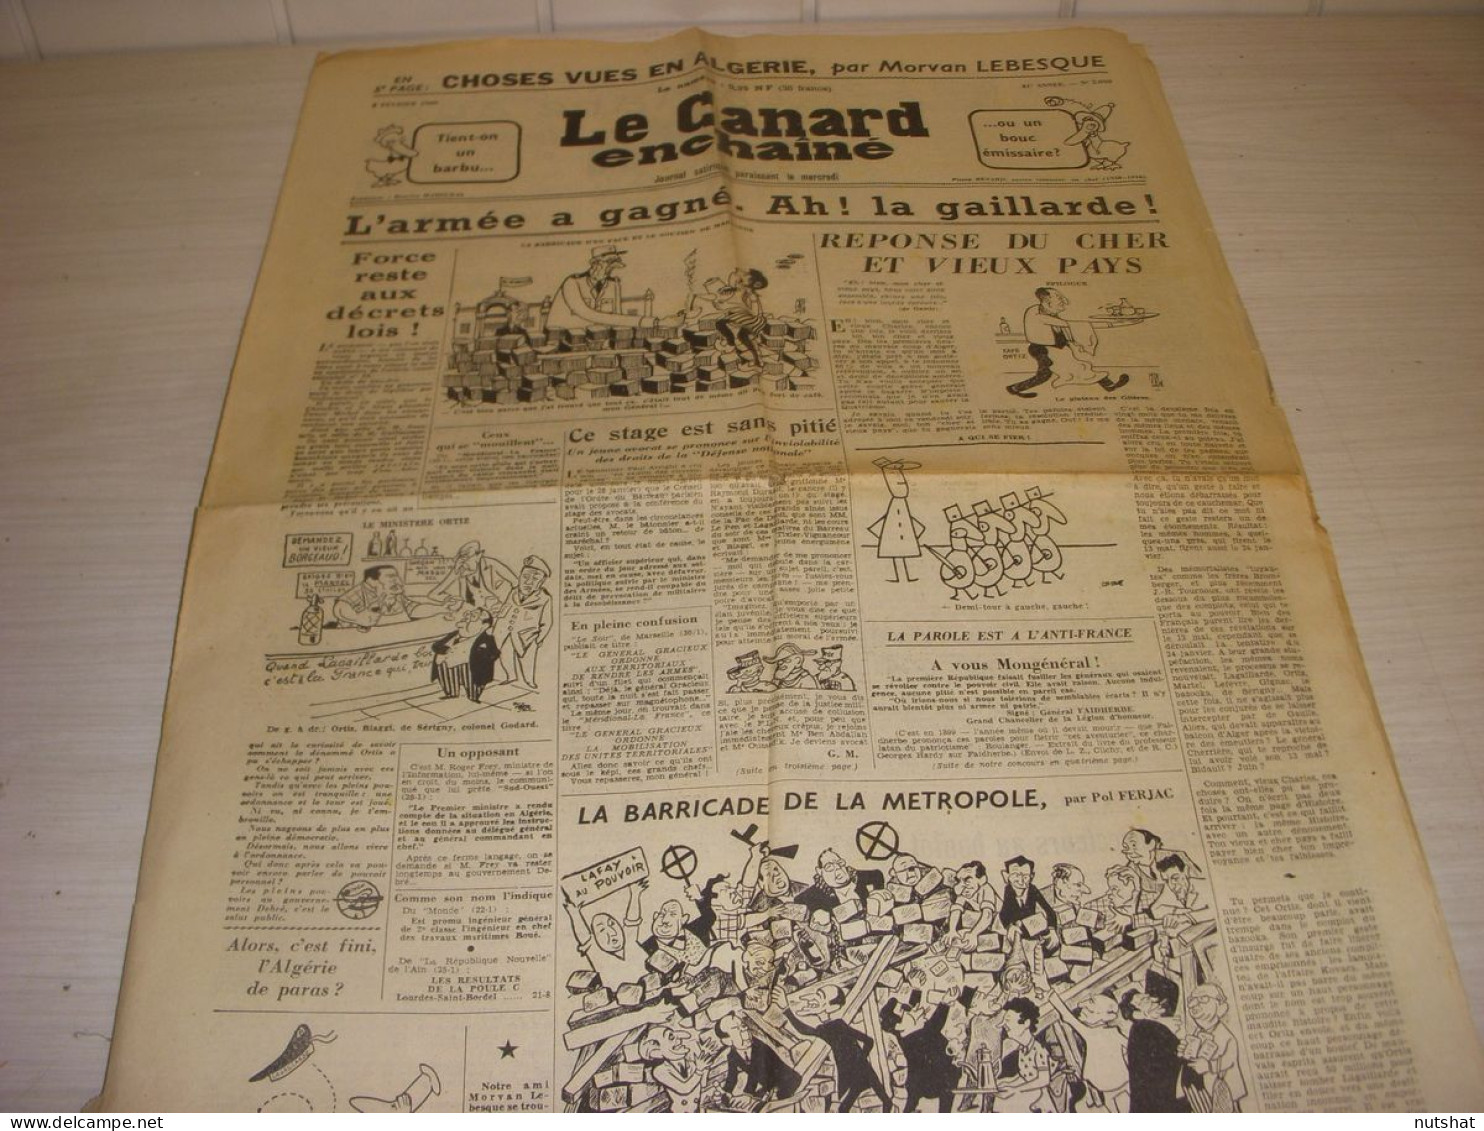 CANARD ENCHAINE 2050 03.02.1960 TCHERNIA Victoria THERAME CHOSES VUES En ALGERIE - Politica